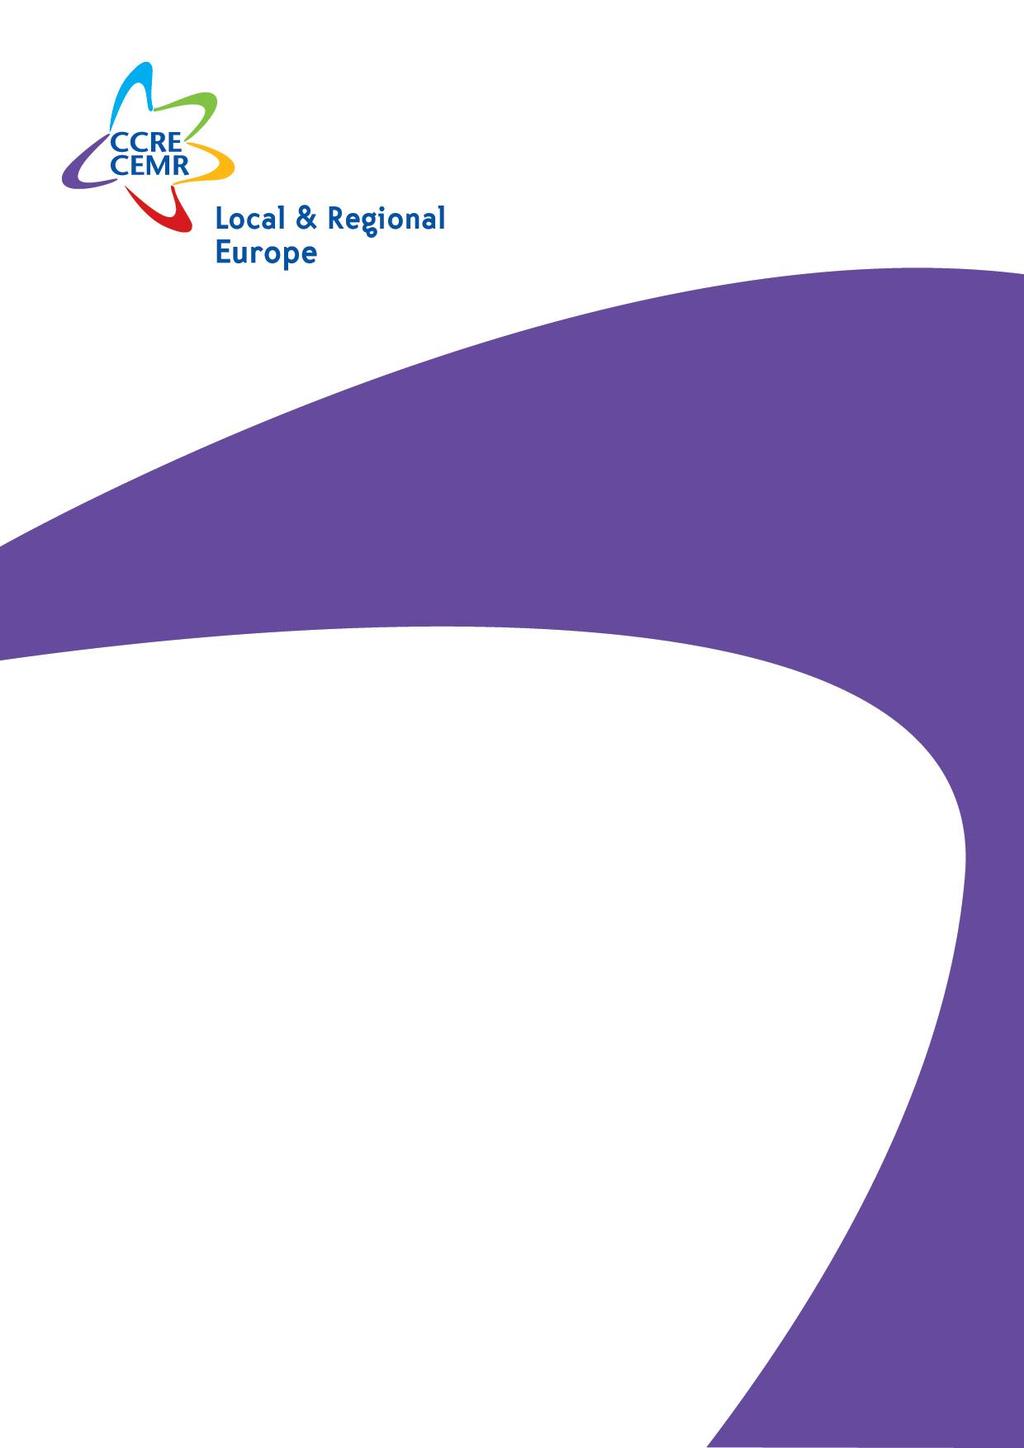 Strong public services through local governments CEMR position paper December 2018 Council of European